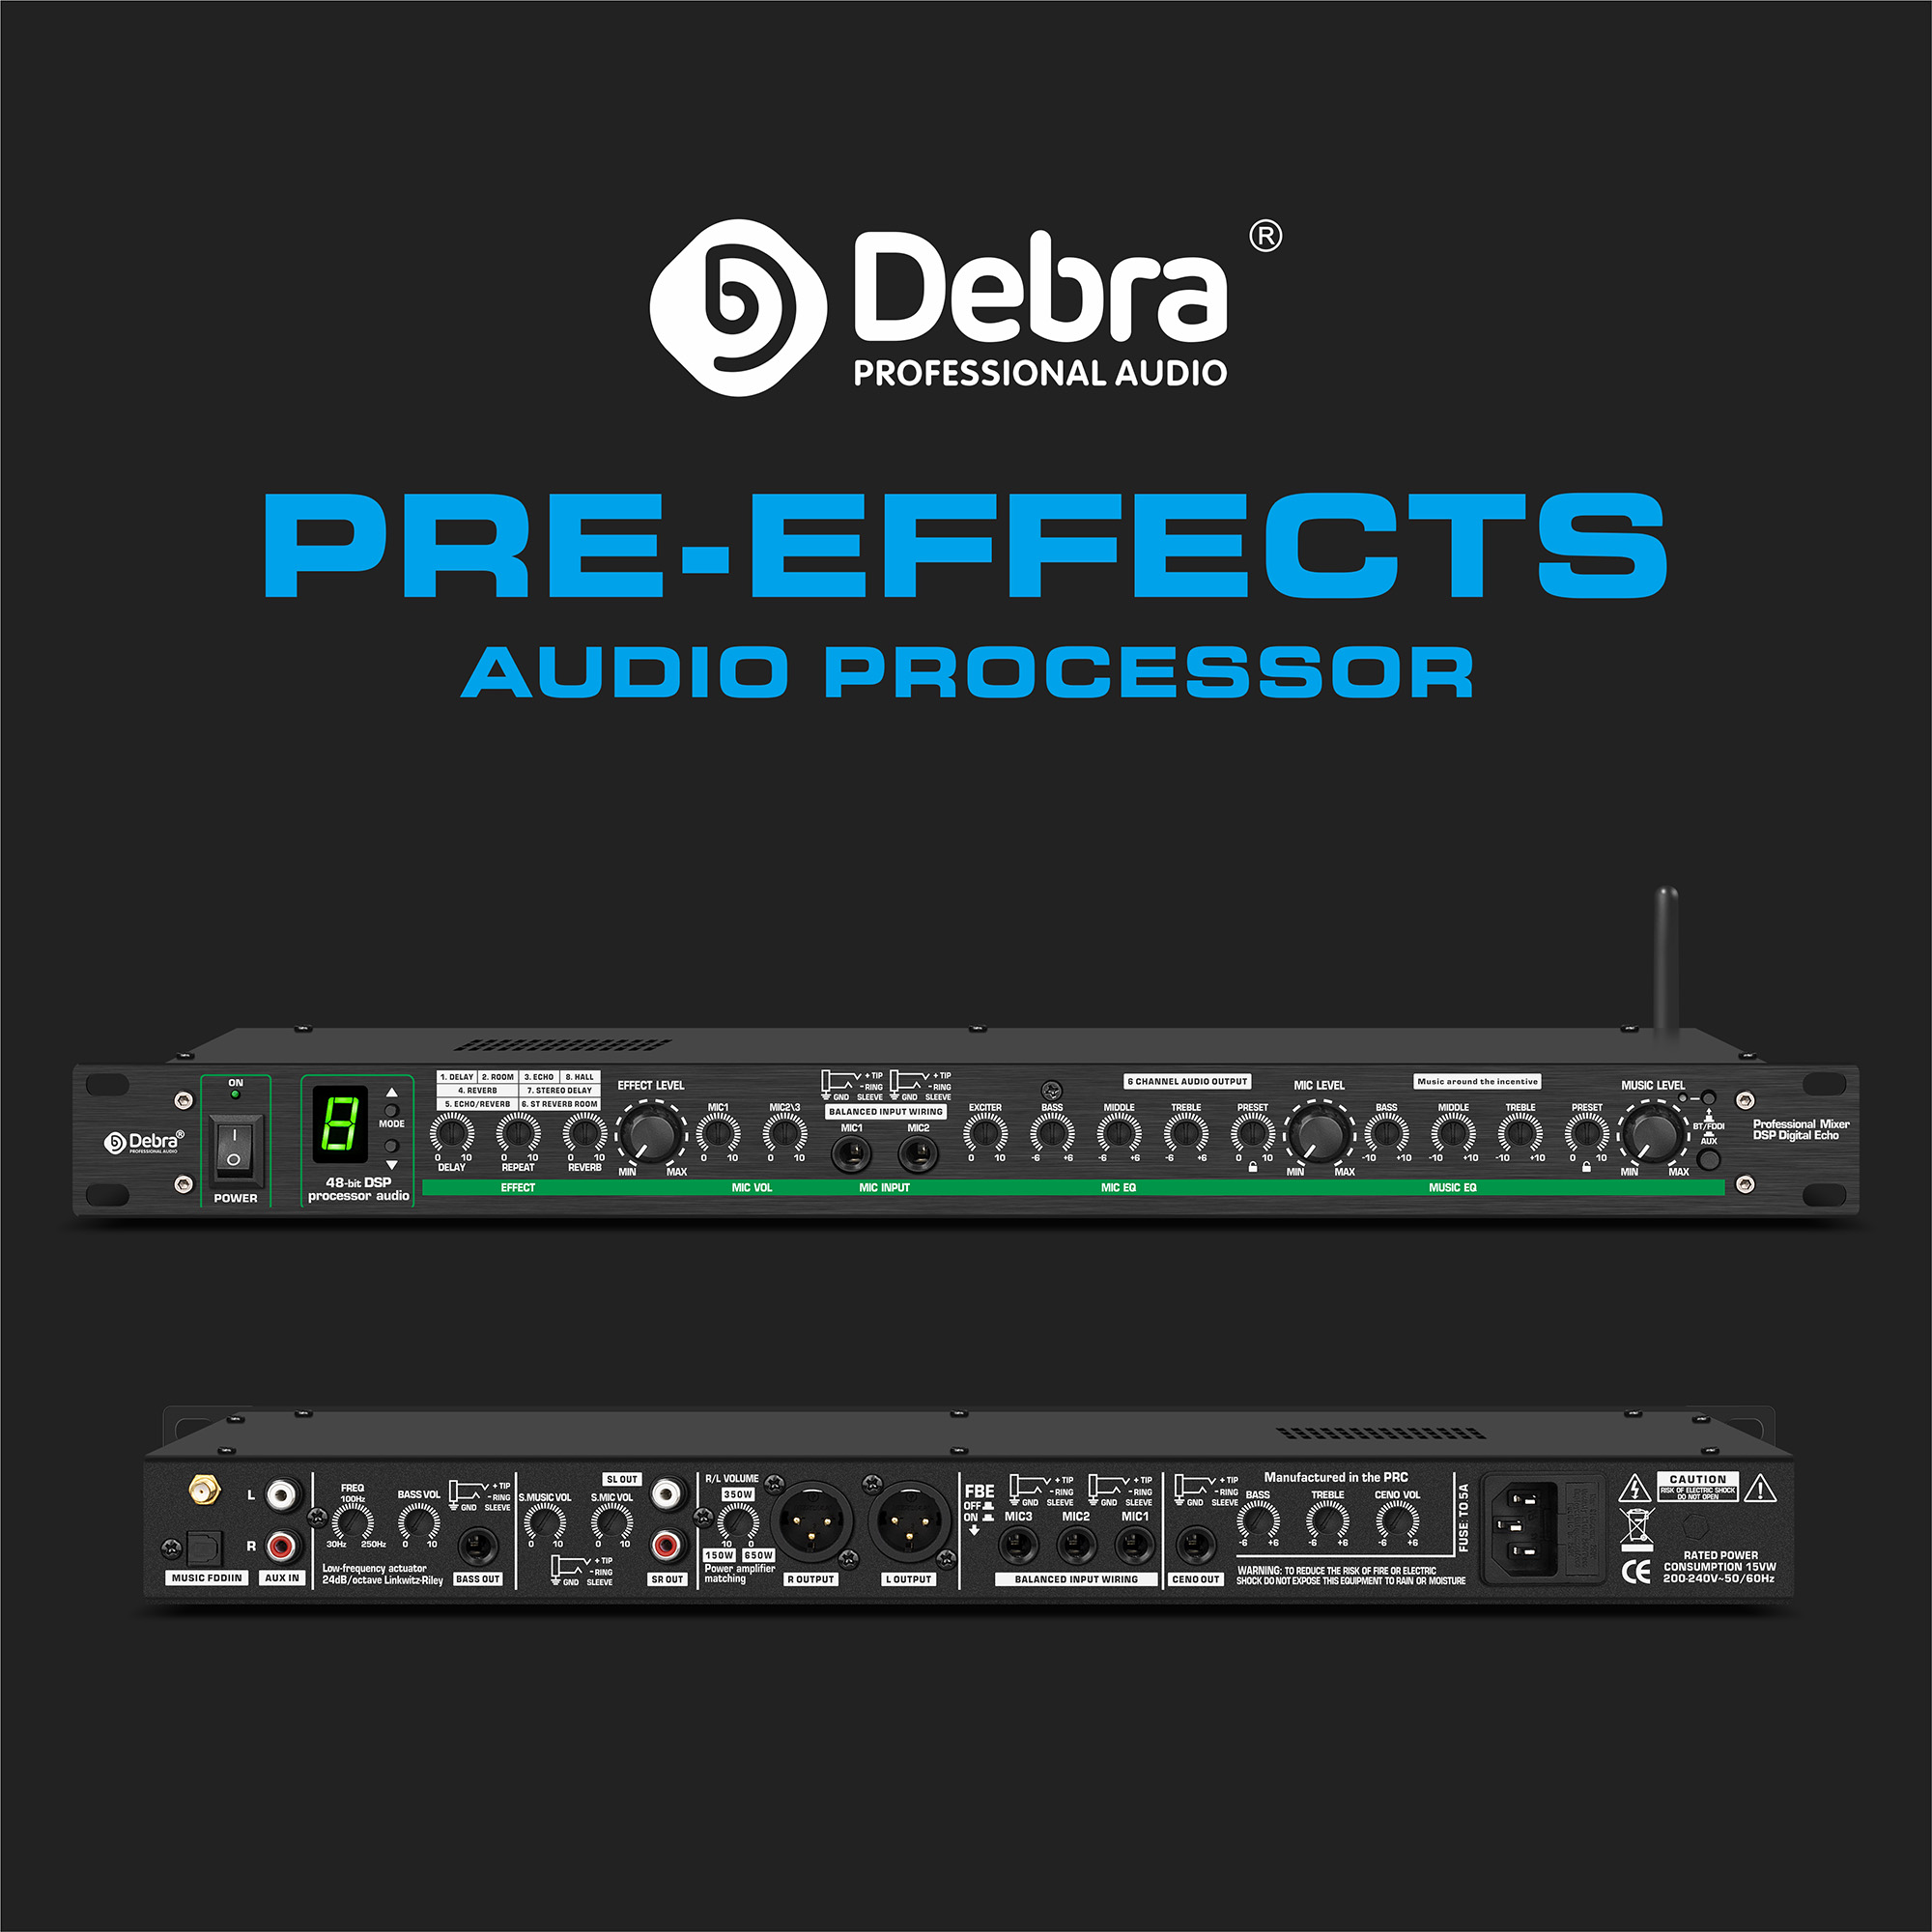 Pre-effects Audio Processor